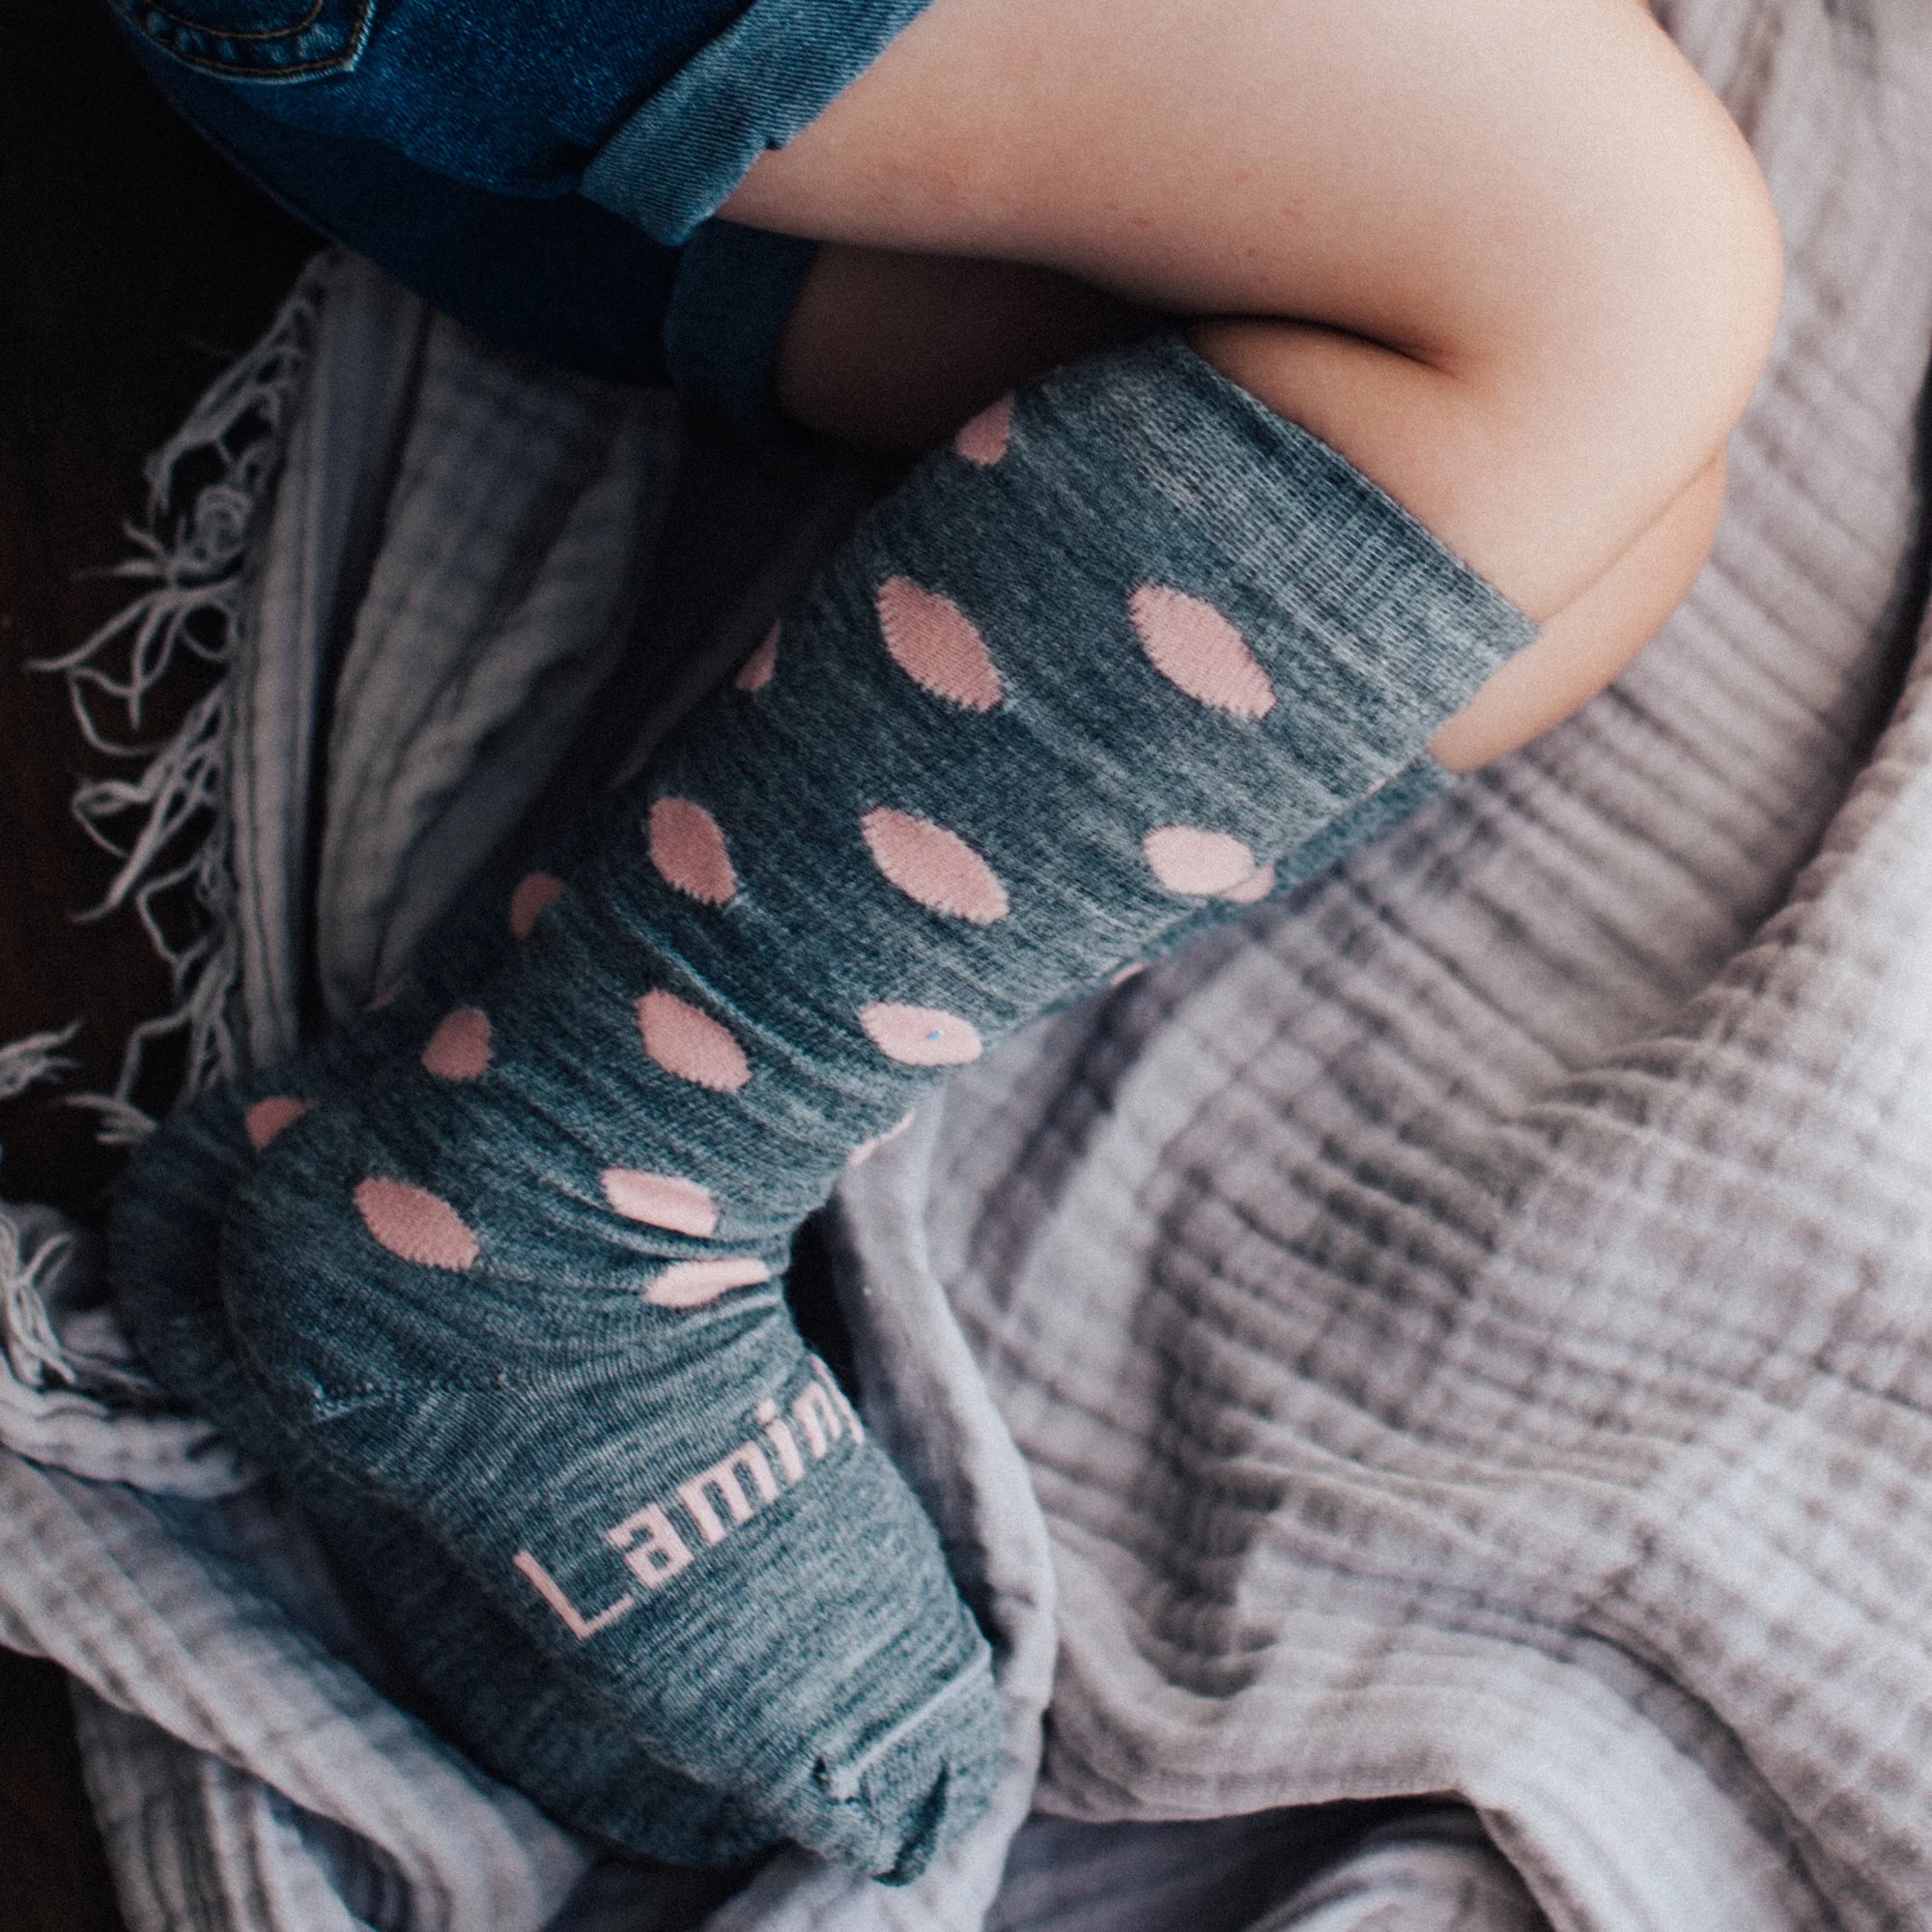 Merino Wool Child Socks + Tights - ALL